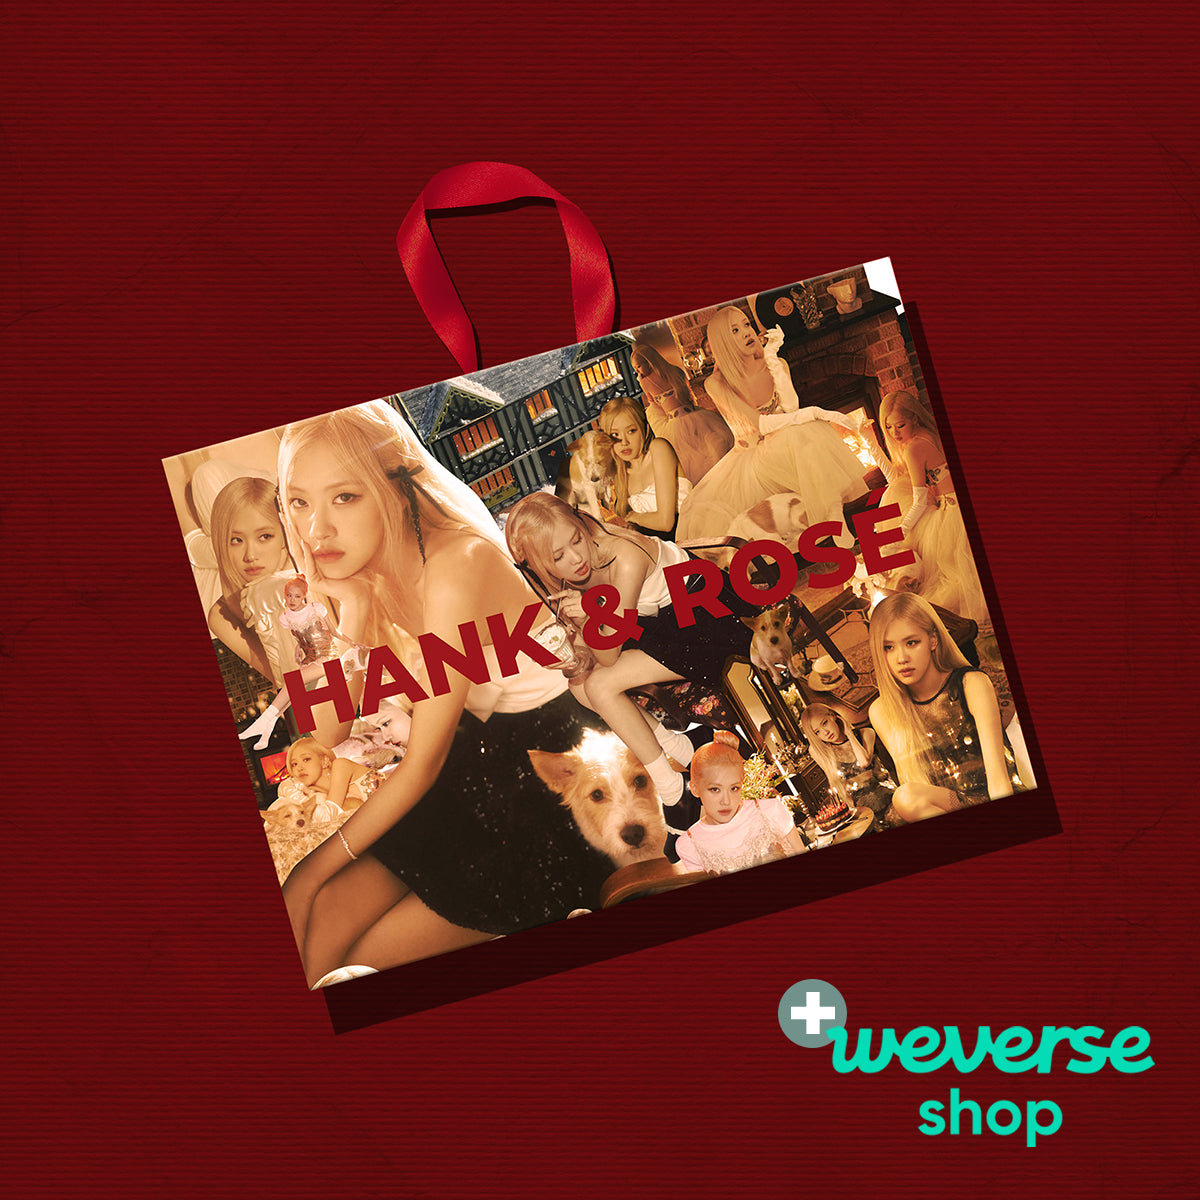 ROSÉ (BLACKPINK) - Season’s Greetings: From HANK & ROSÉ To You [2024] + Wevese Shop P.O.B